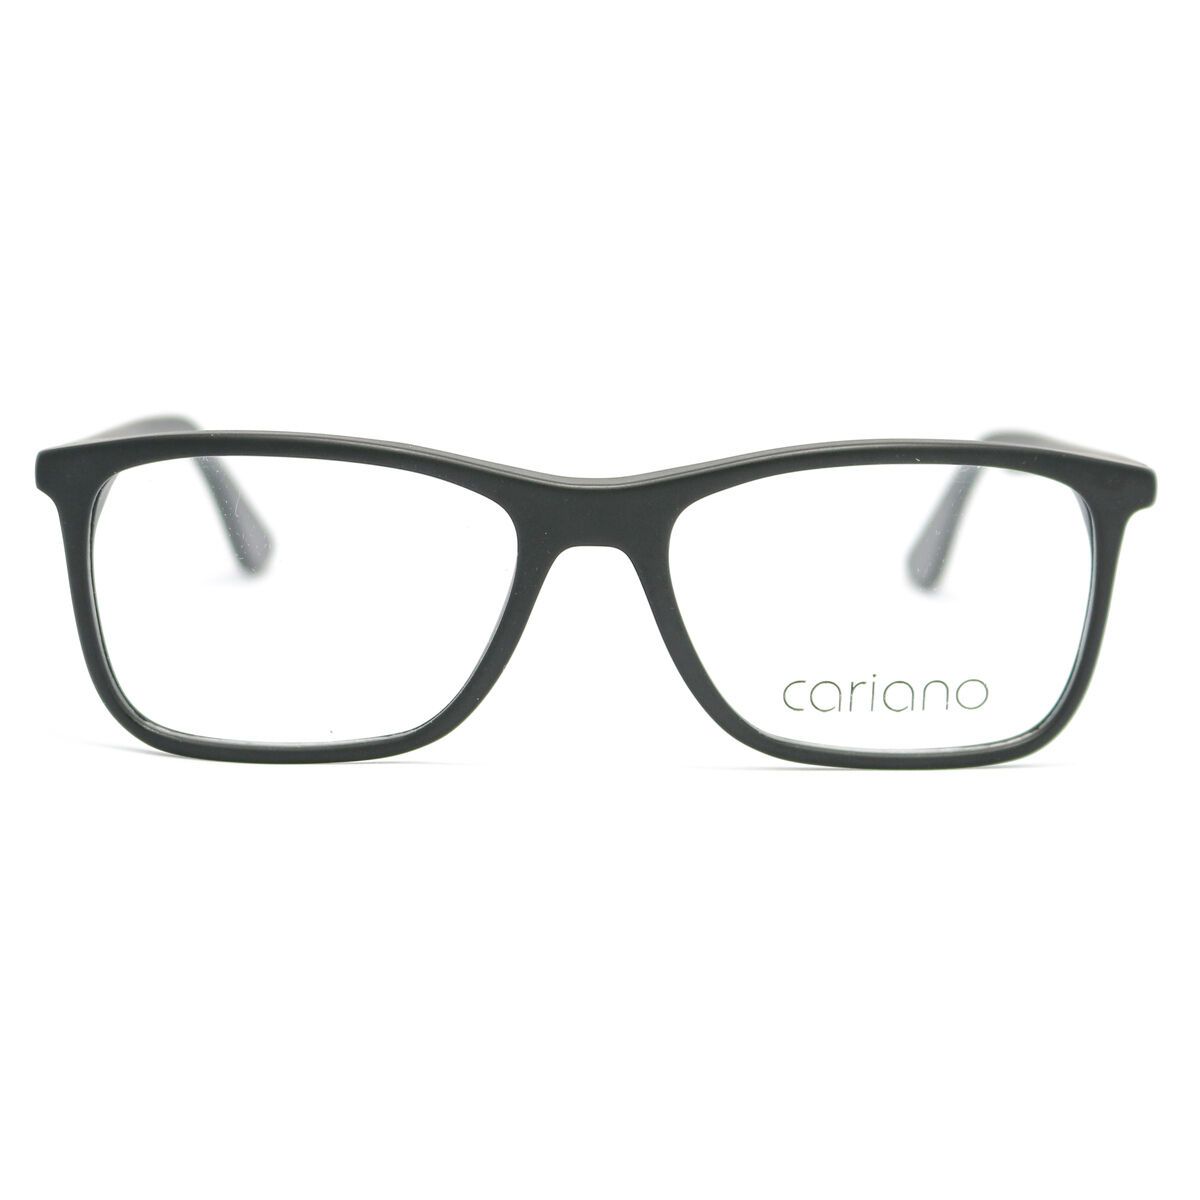 111 Square Eyeglasses A - size  52